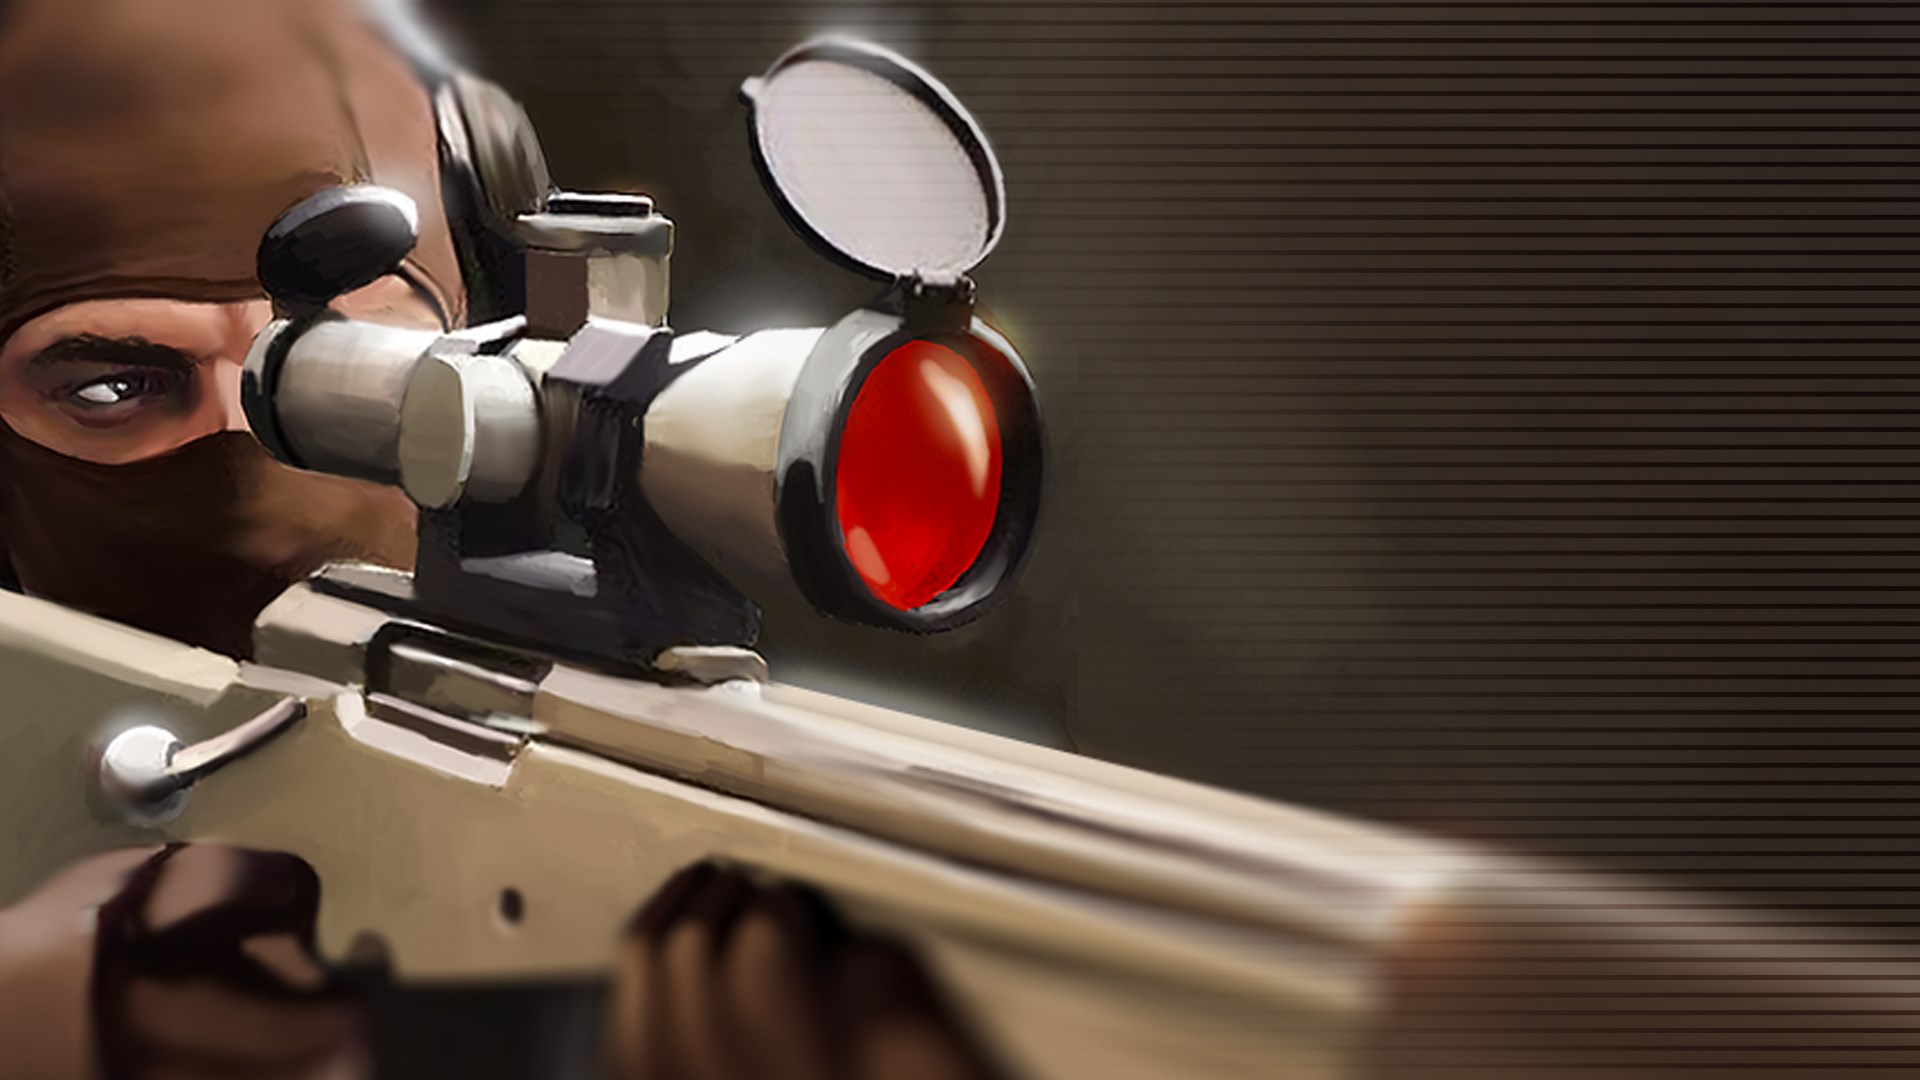 Gun Sniper Shooter Strike: Elite Shooting Games::Appstore